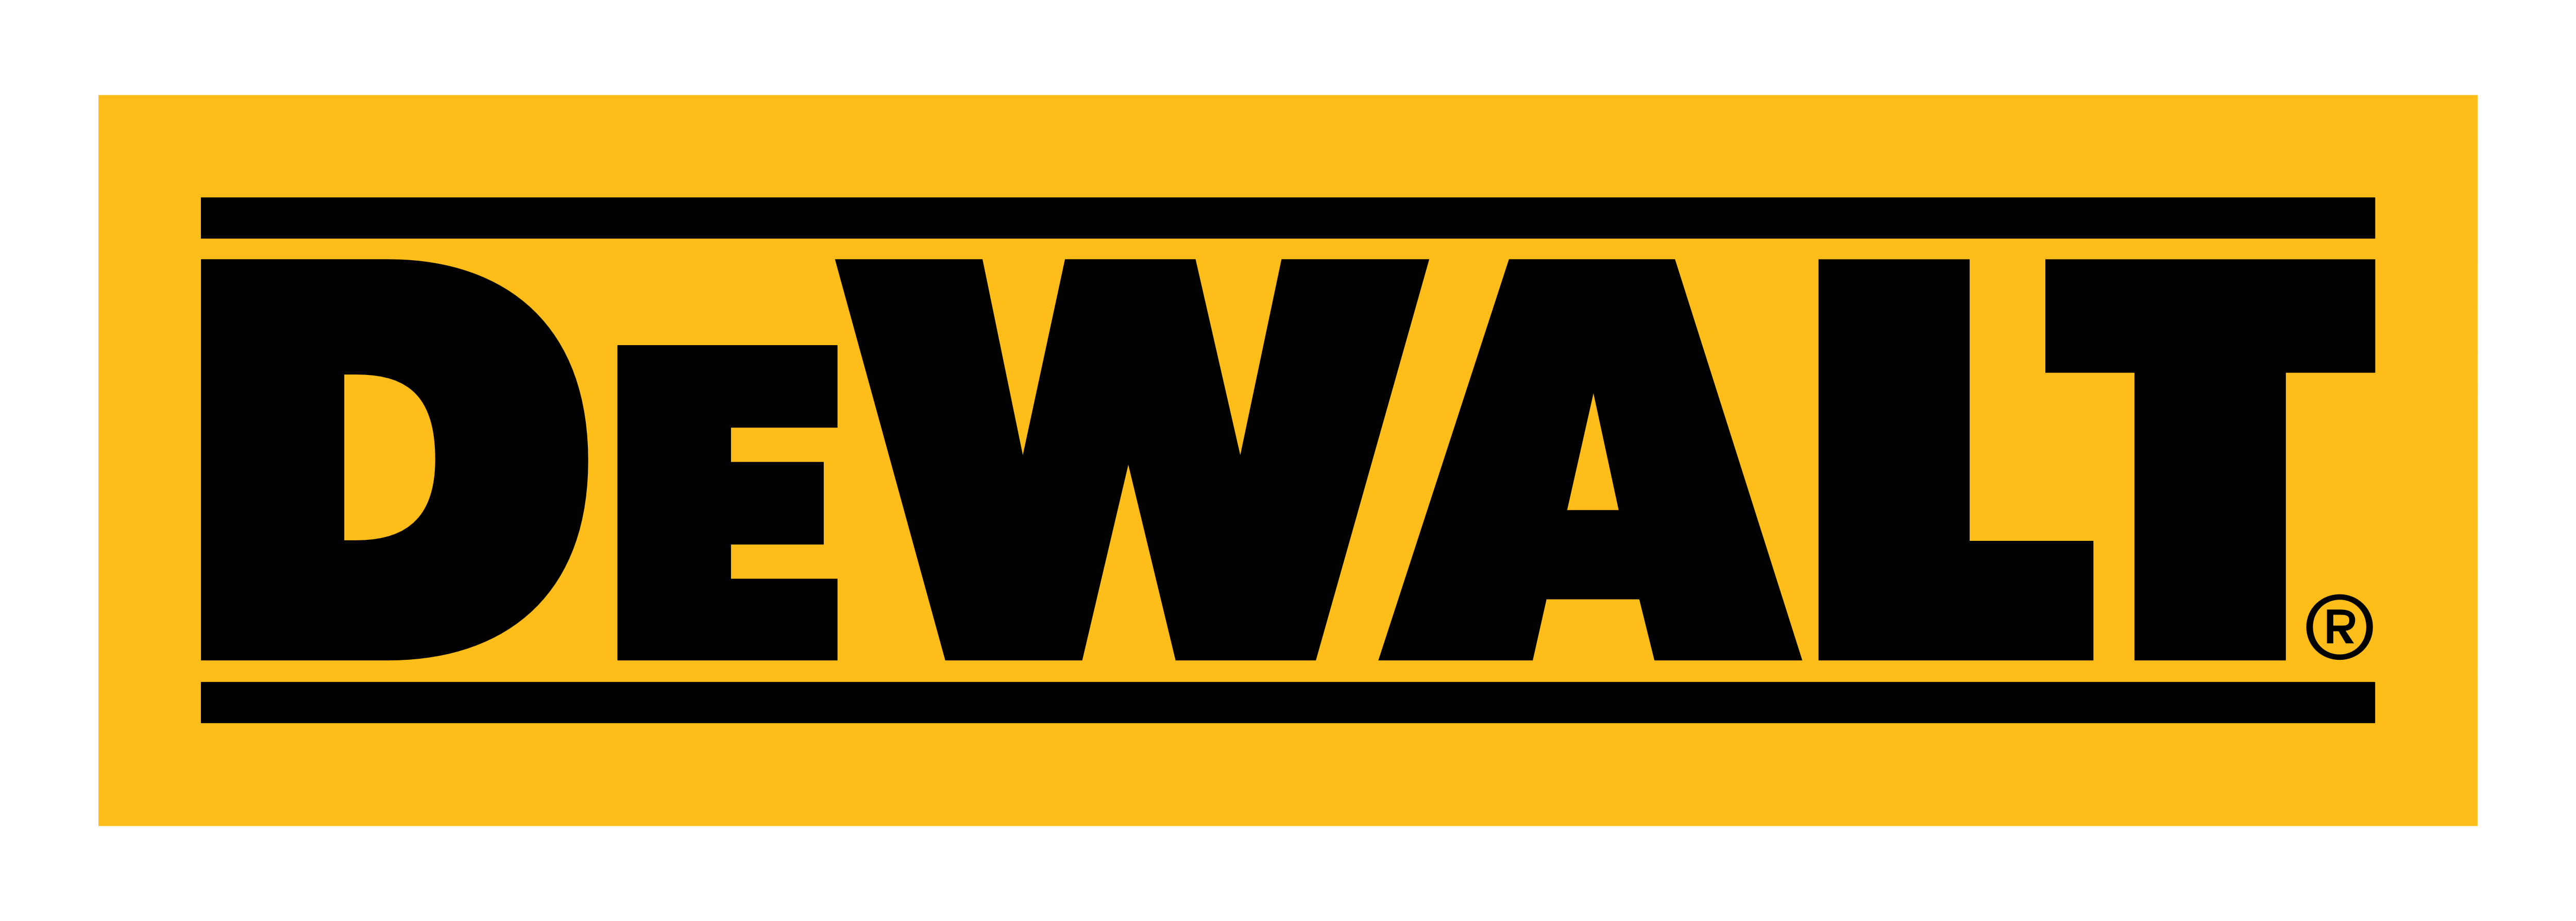 DeWalt Power Tools logo